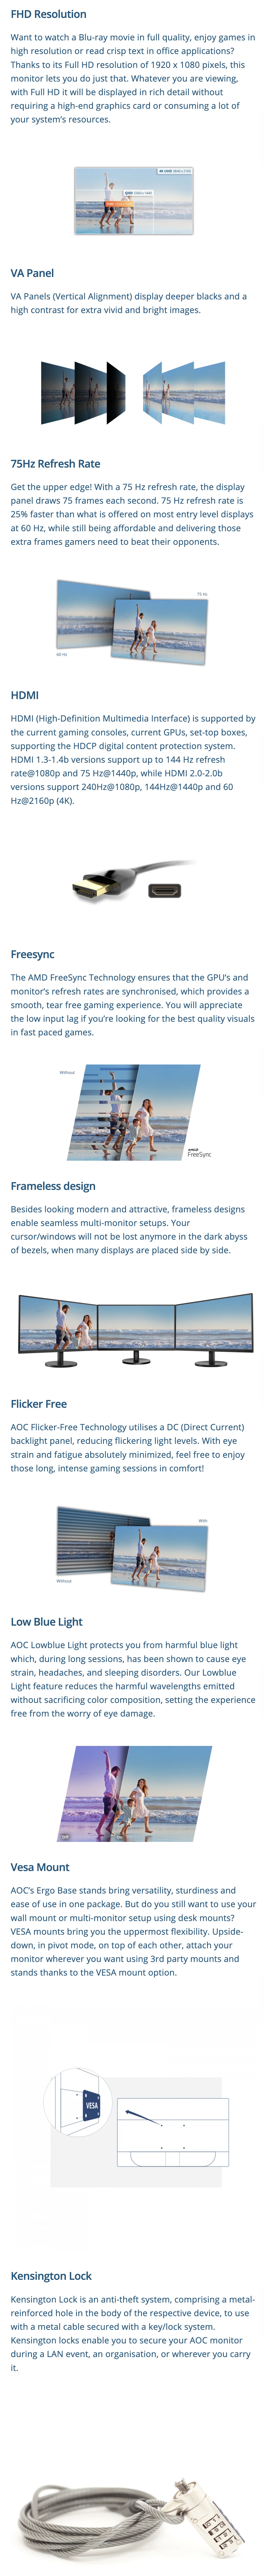 AOC-24B3HM-Three-side-Frameless-Slim-Monitor-23.8-Inches-VA-FHD-4Ms-75Hz-HDMI-AMD-FreeSync-Antiglare-Low-Blue-Light-Flicker-Free-Black-Description-2